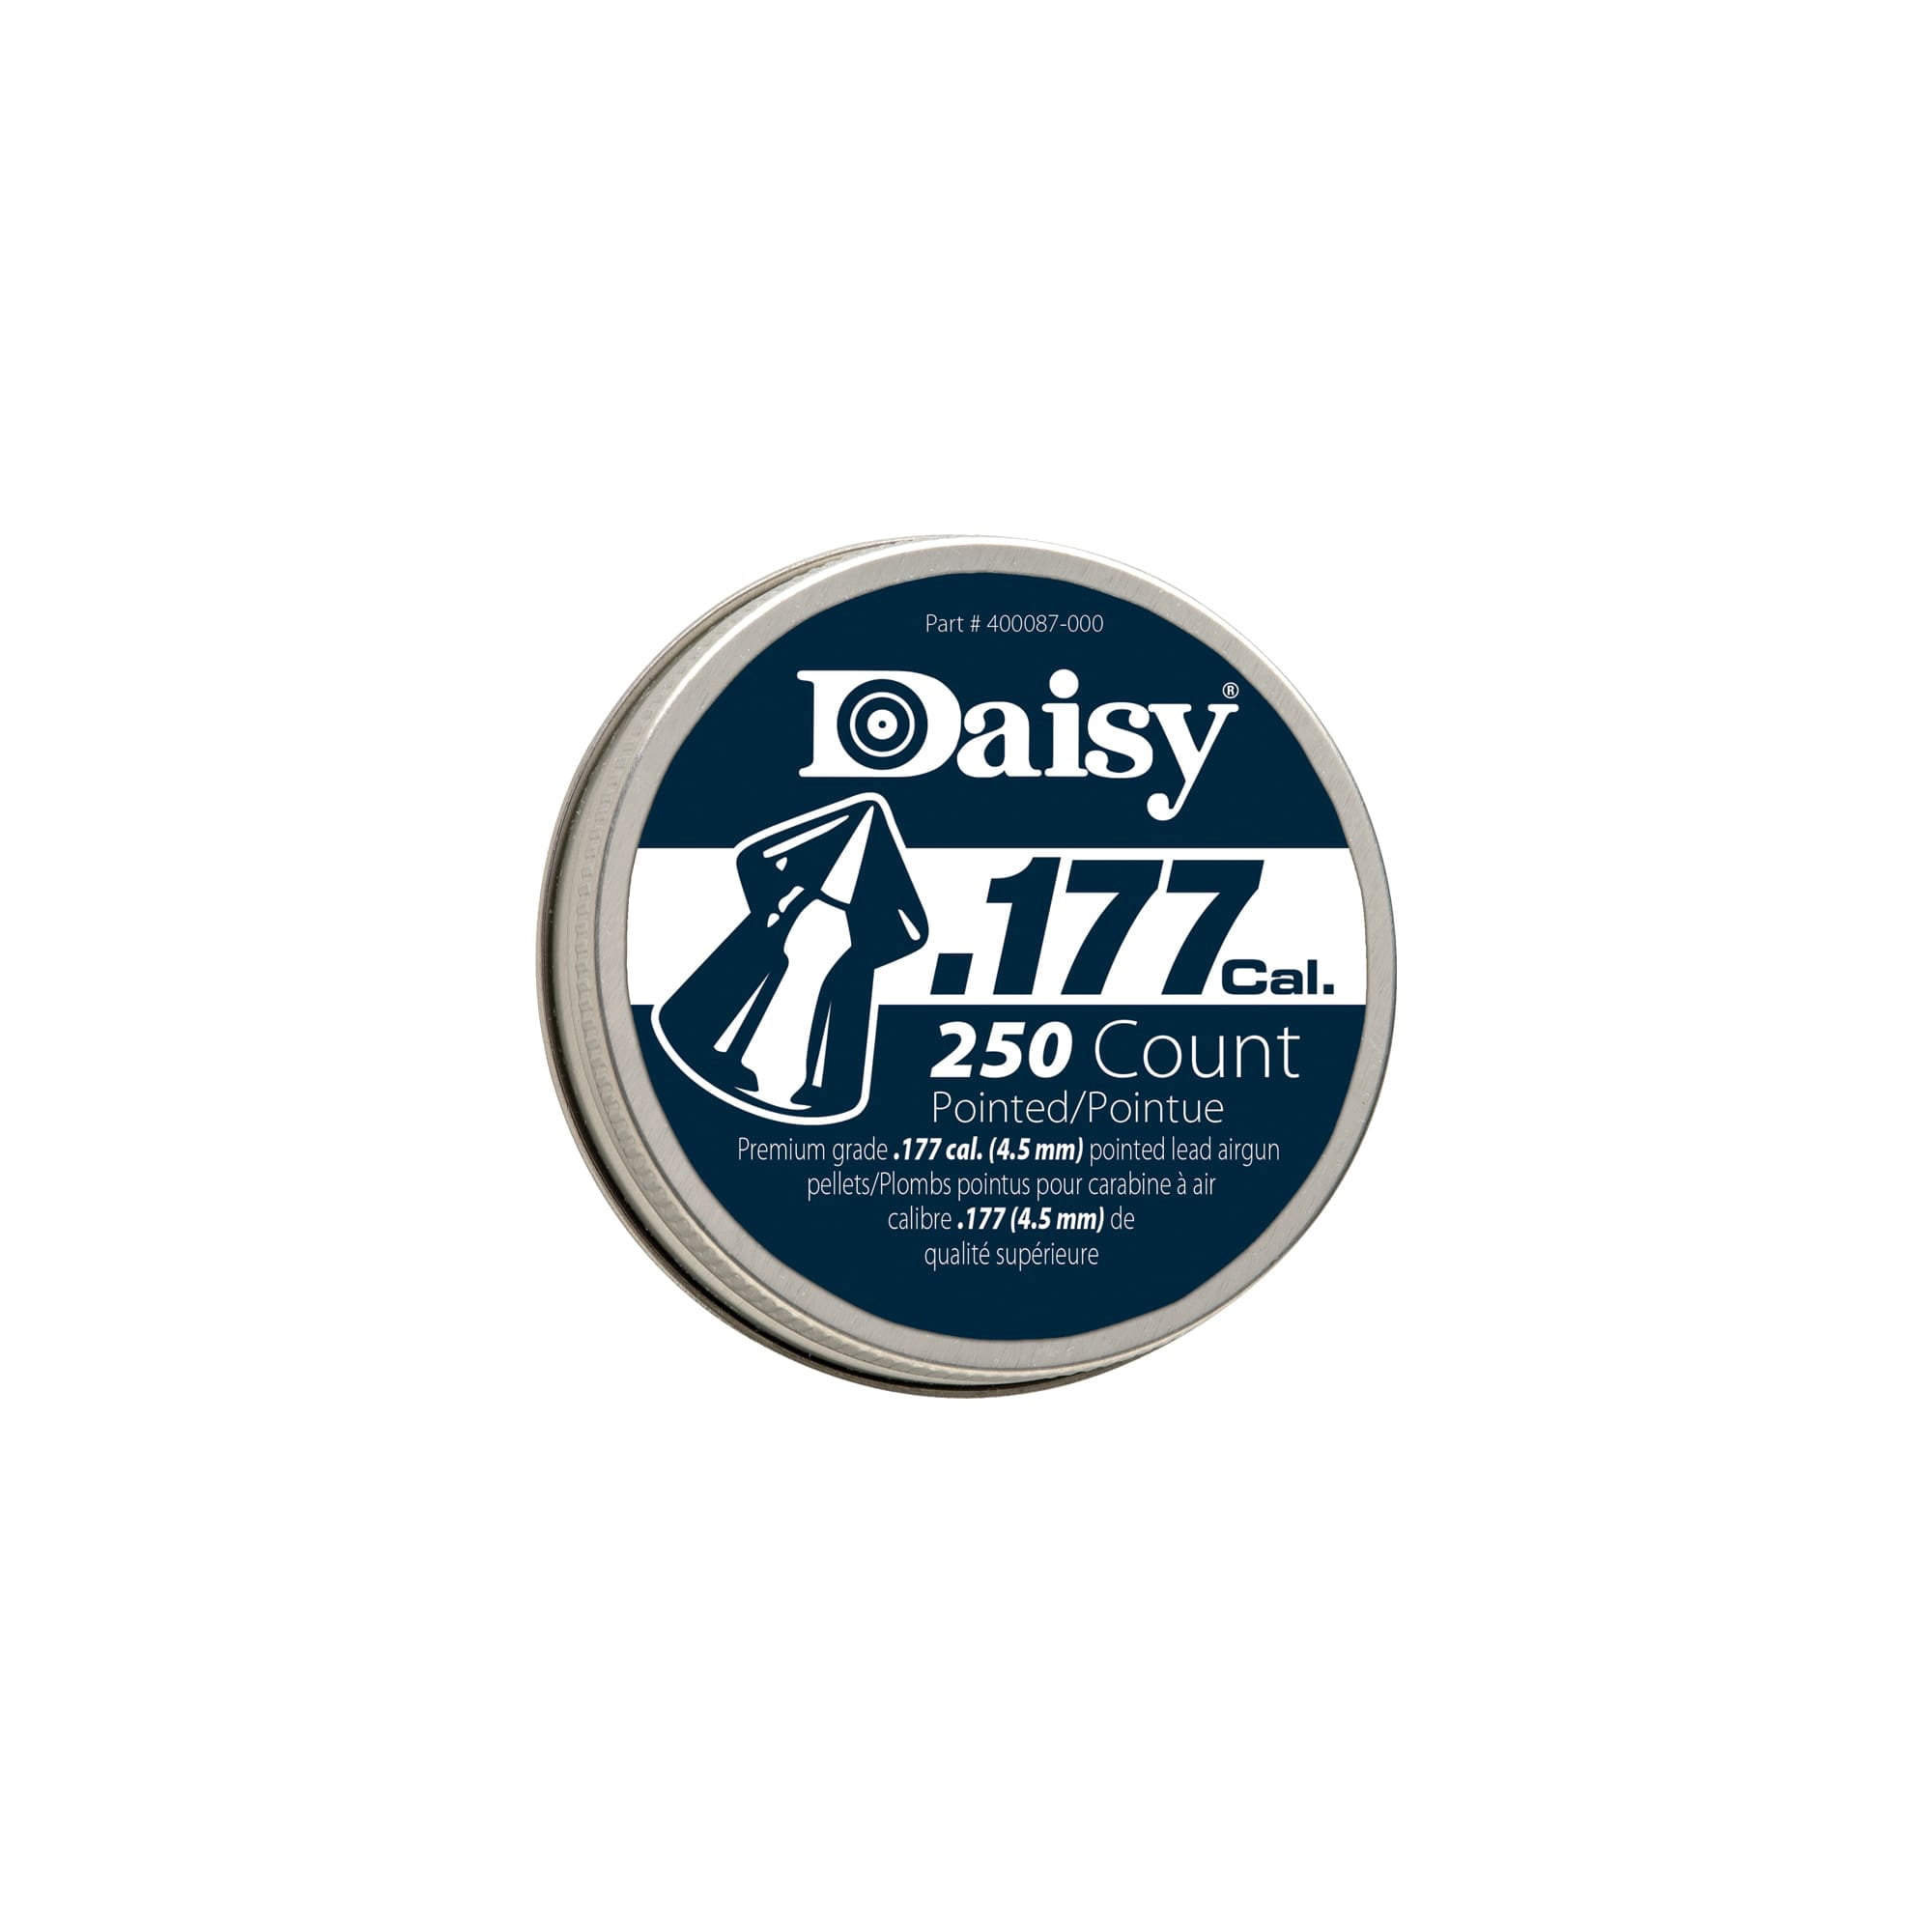 2x Daisy 7597 Premium Grade .177 Caliber Flatnosed Pellets for sale online